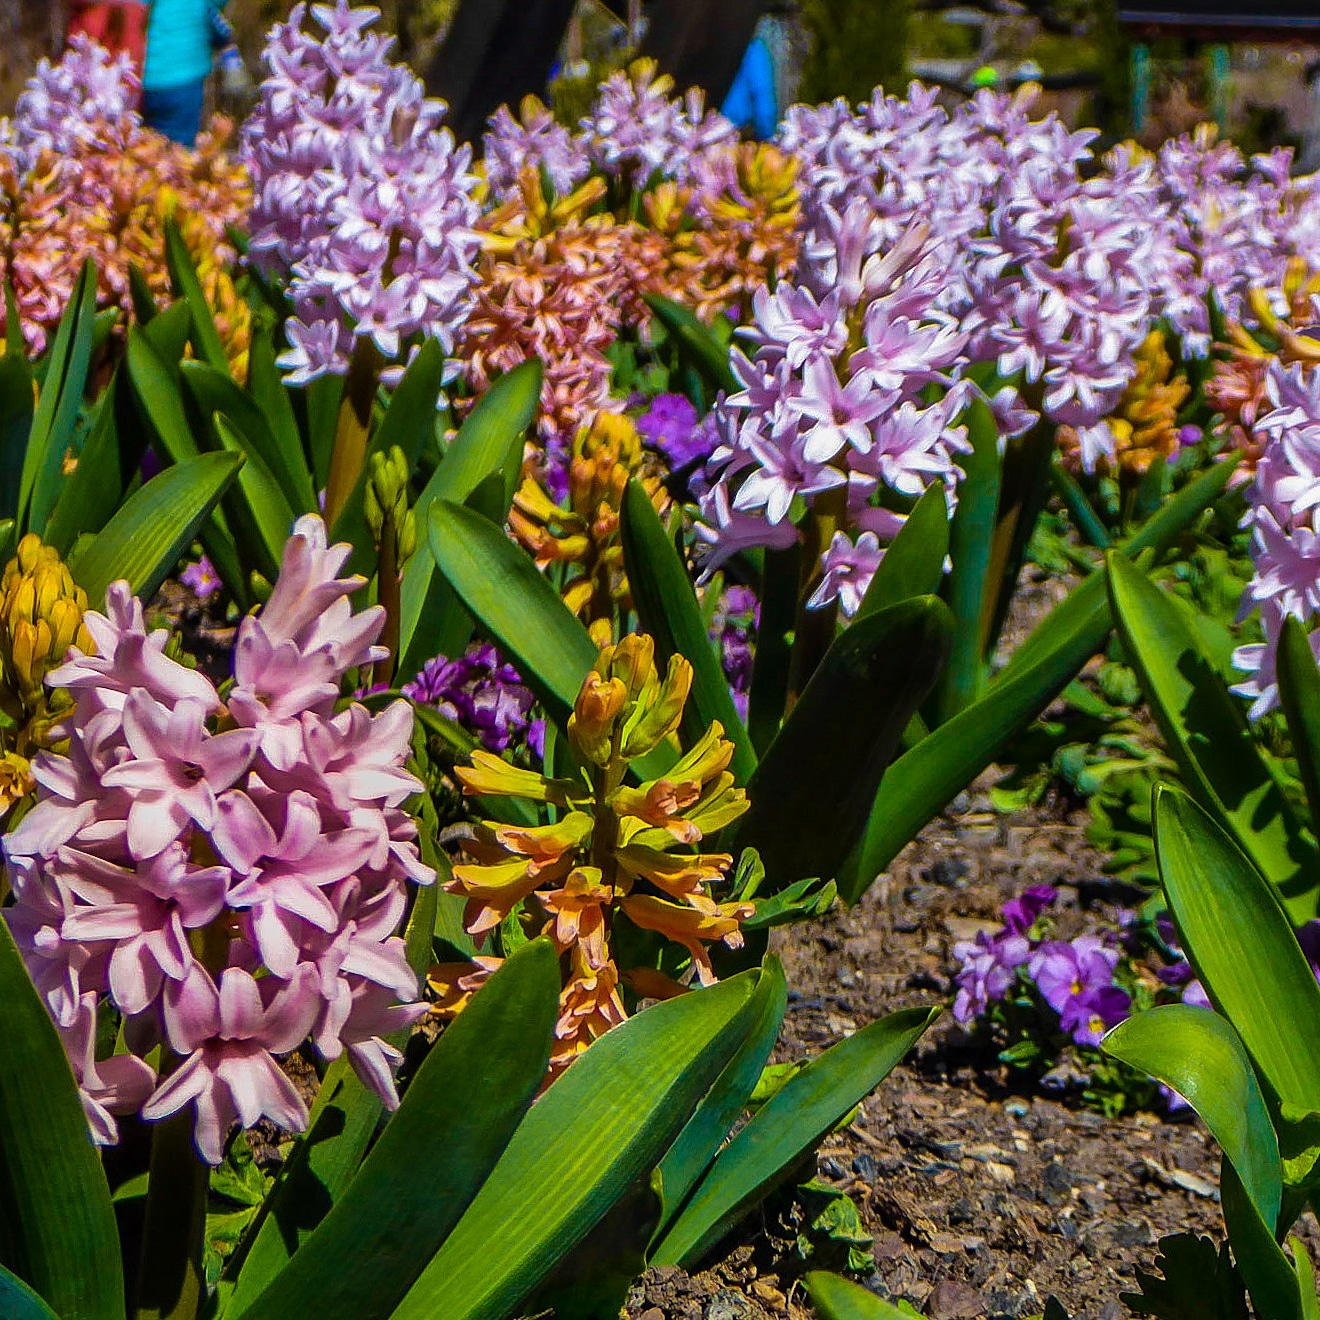 Take Time to Smell the “Stinky Flower” at Denver Botanic Gardens